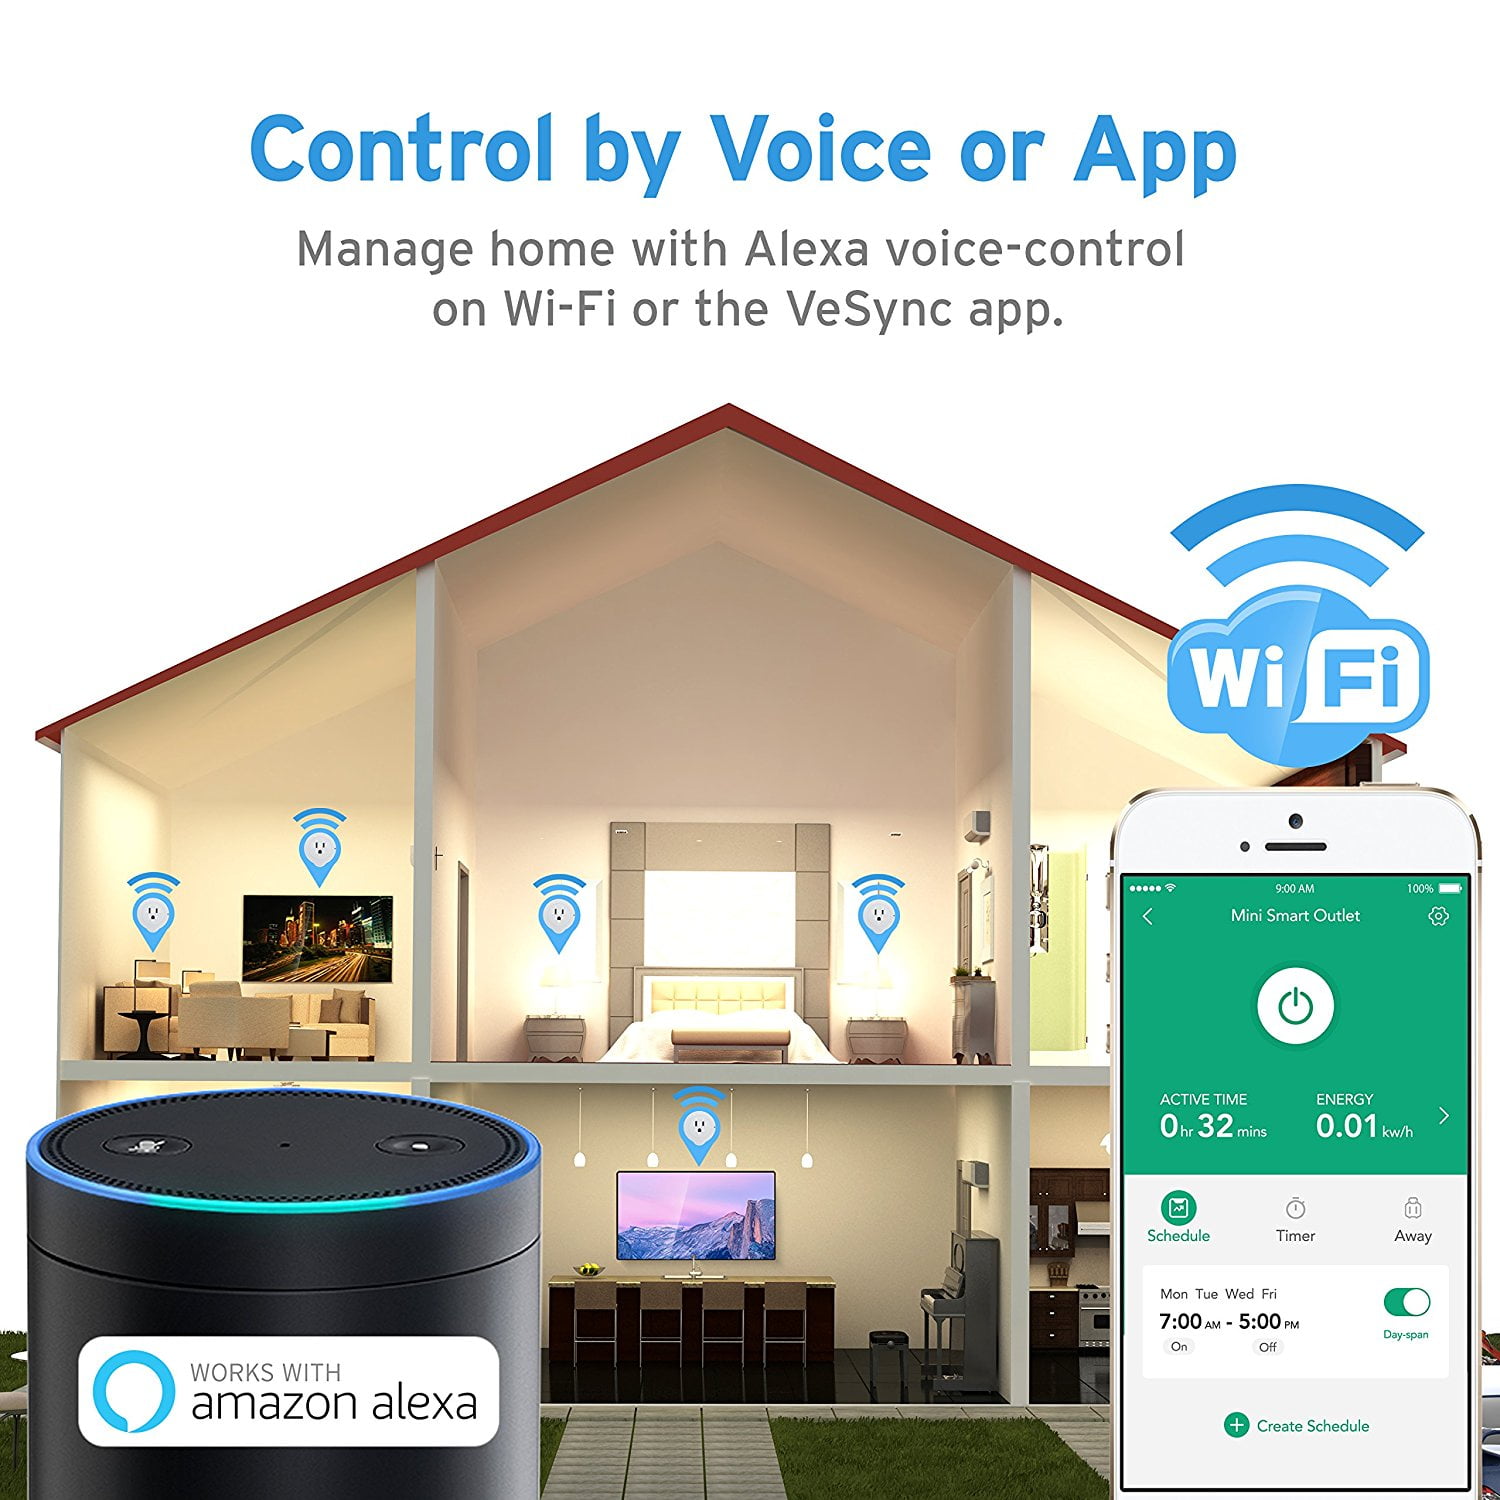 Etekcity Smart Plug Review: Affordable Energy Monitoring with Alexa